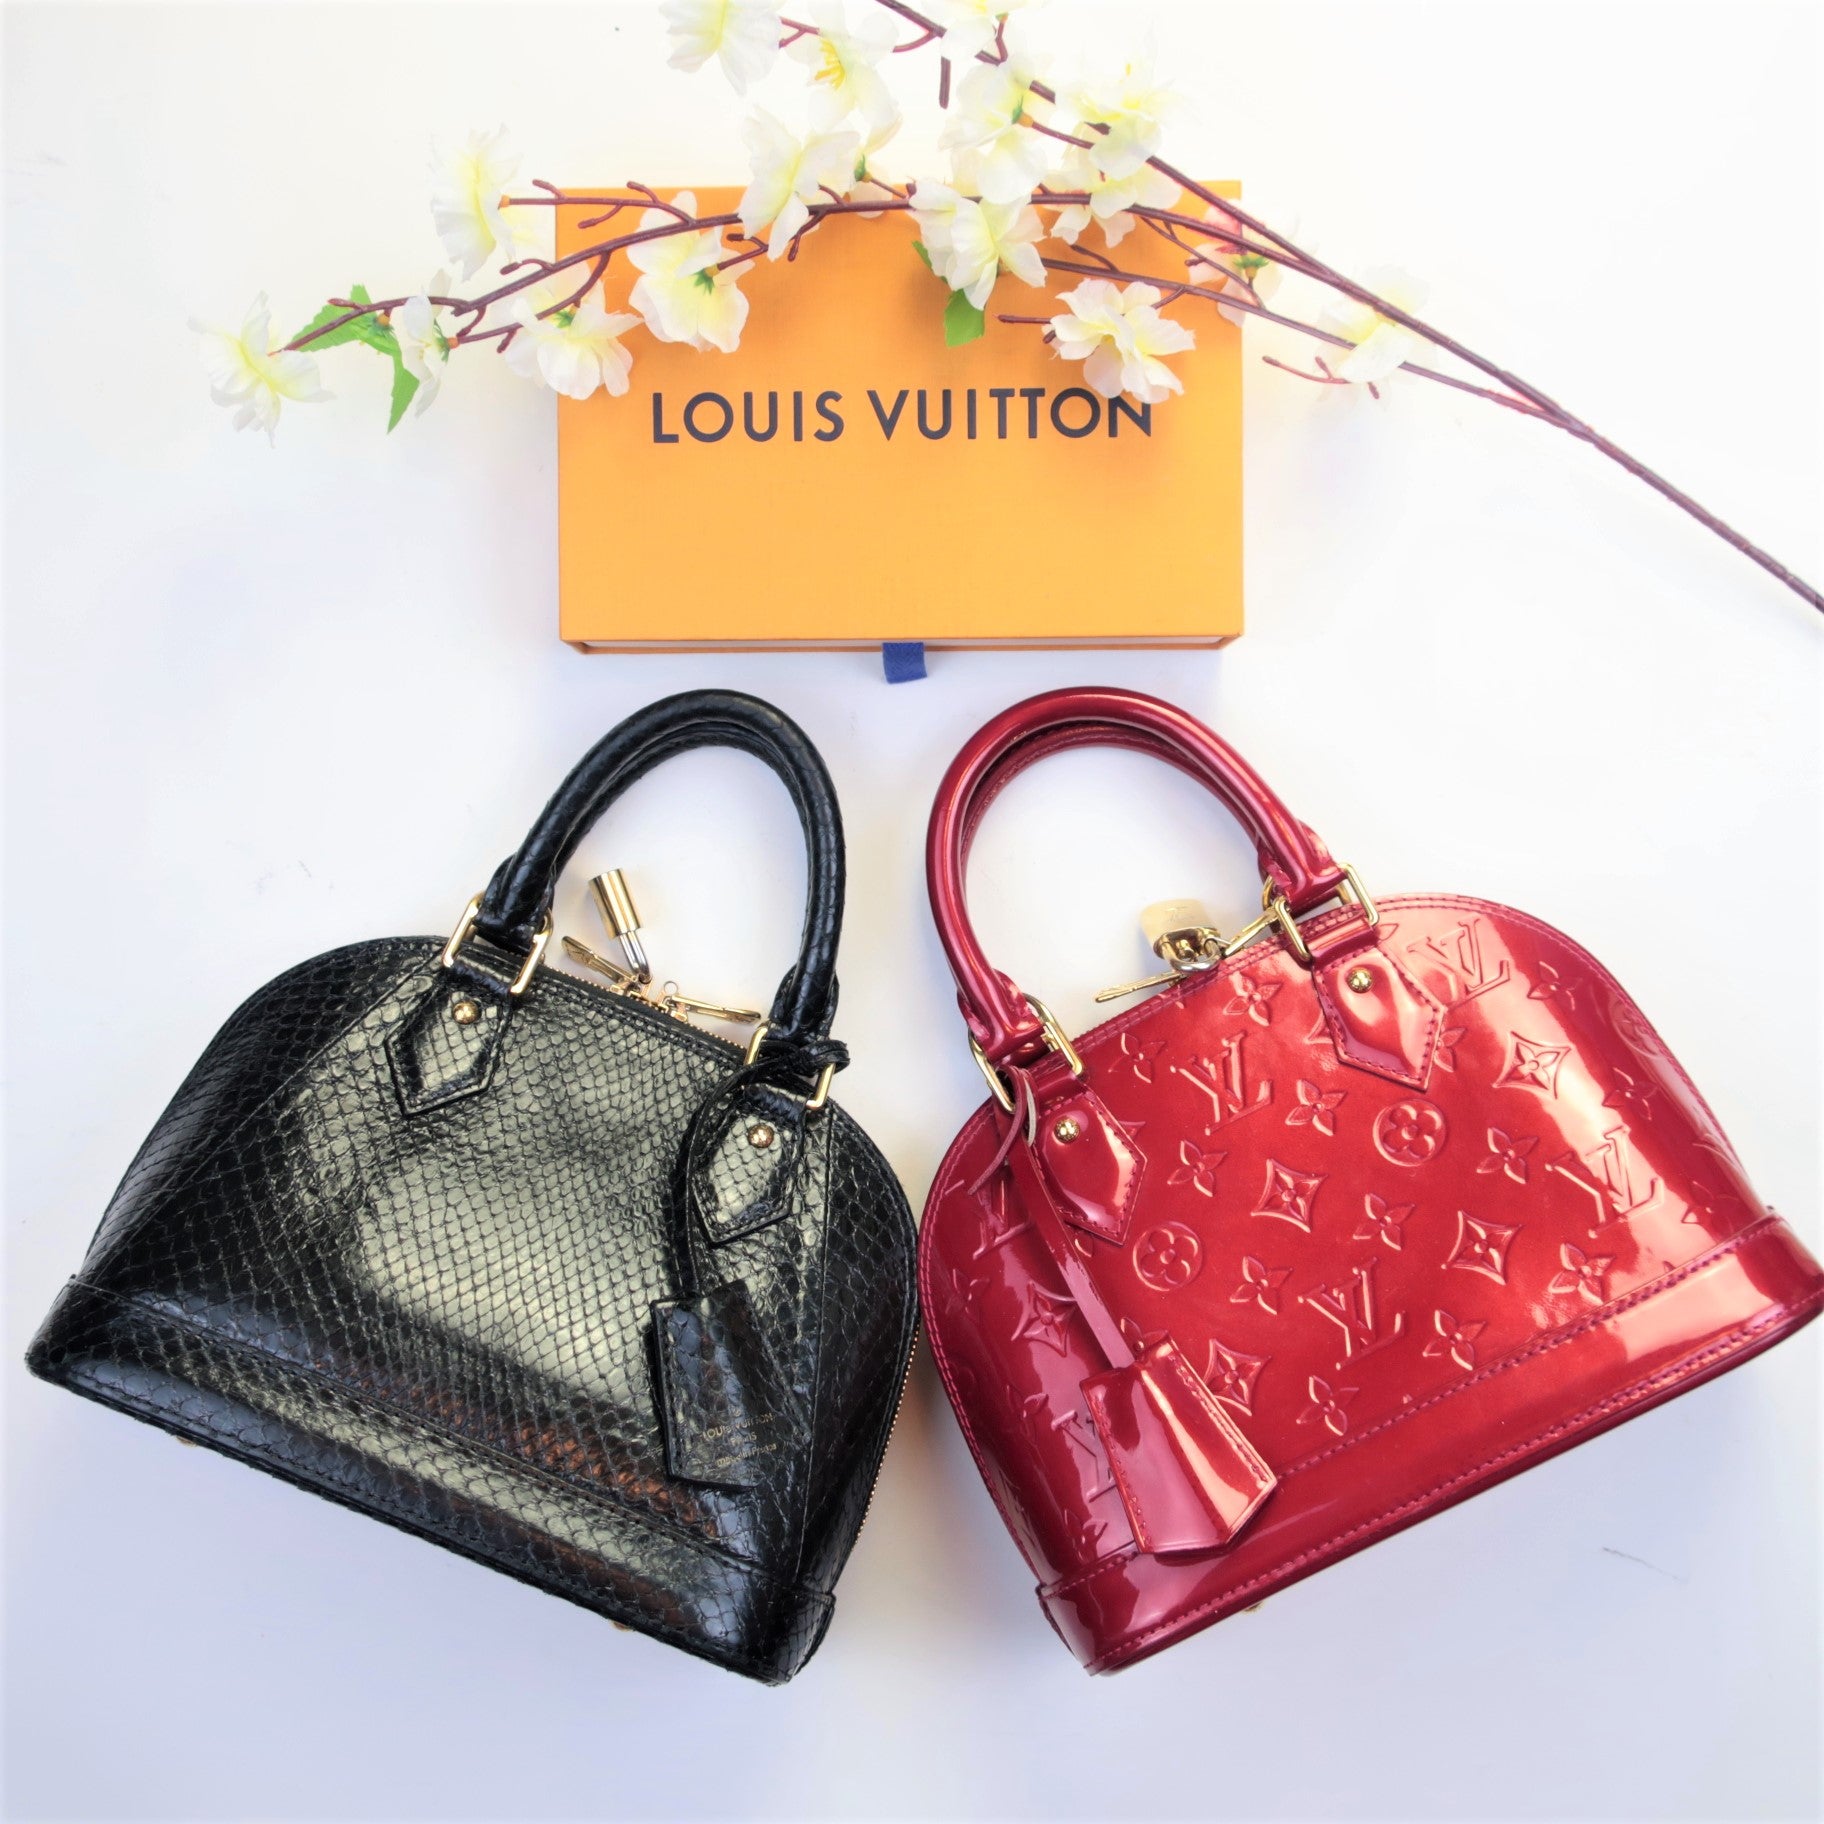 Louis Vuitton Alma BB Review, Damier Ebene, Wear and Tear, WFIMB, MOD  Shots